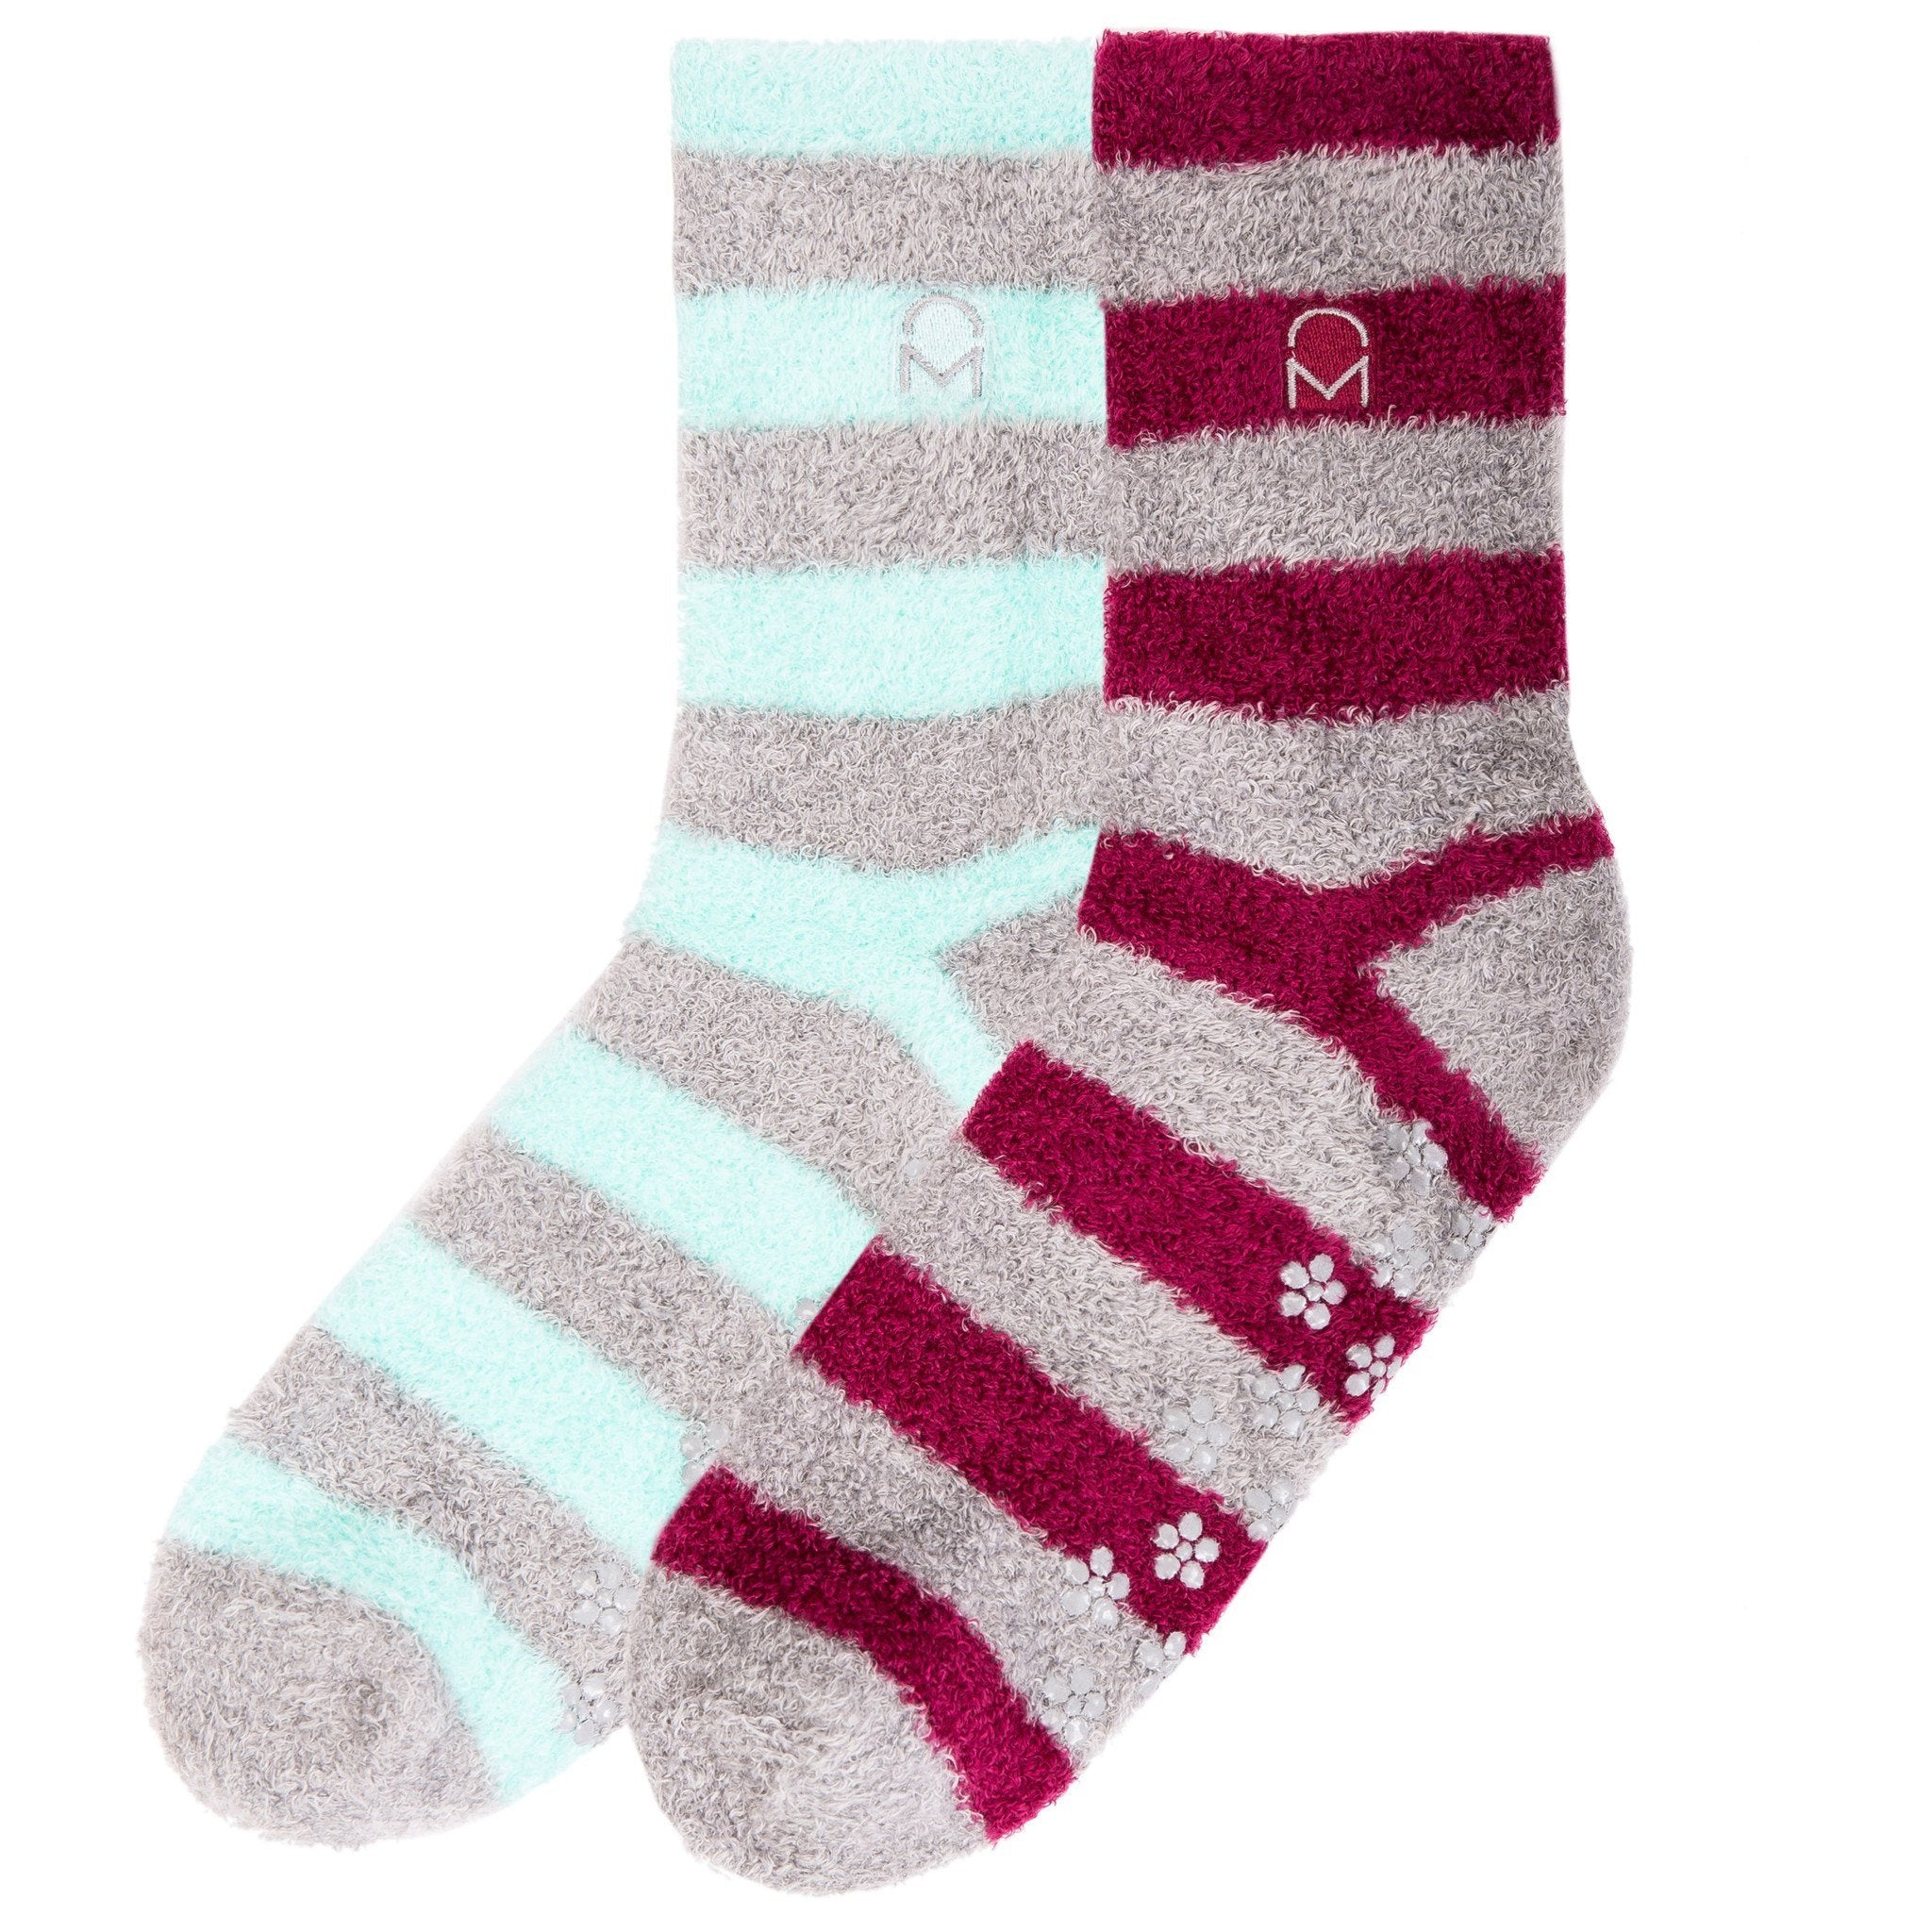 Box Packaged Women's Soft Anti-Skid Winter Feather Socks - 2-Pairs - Set C8